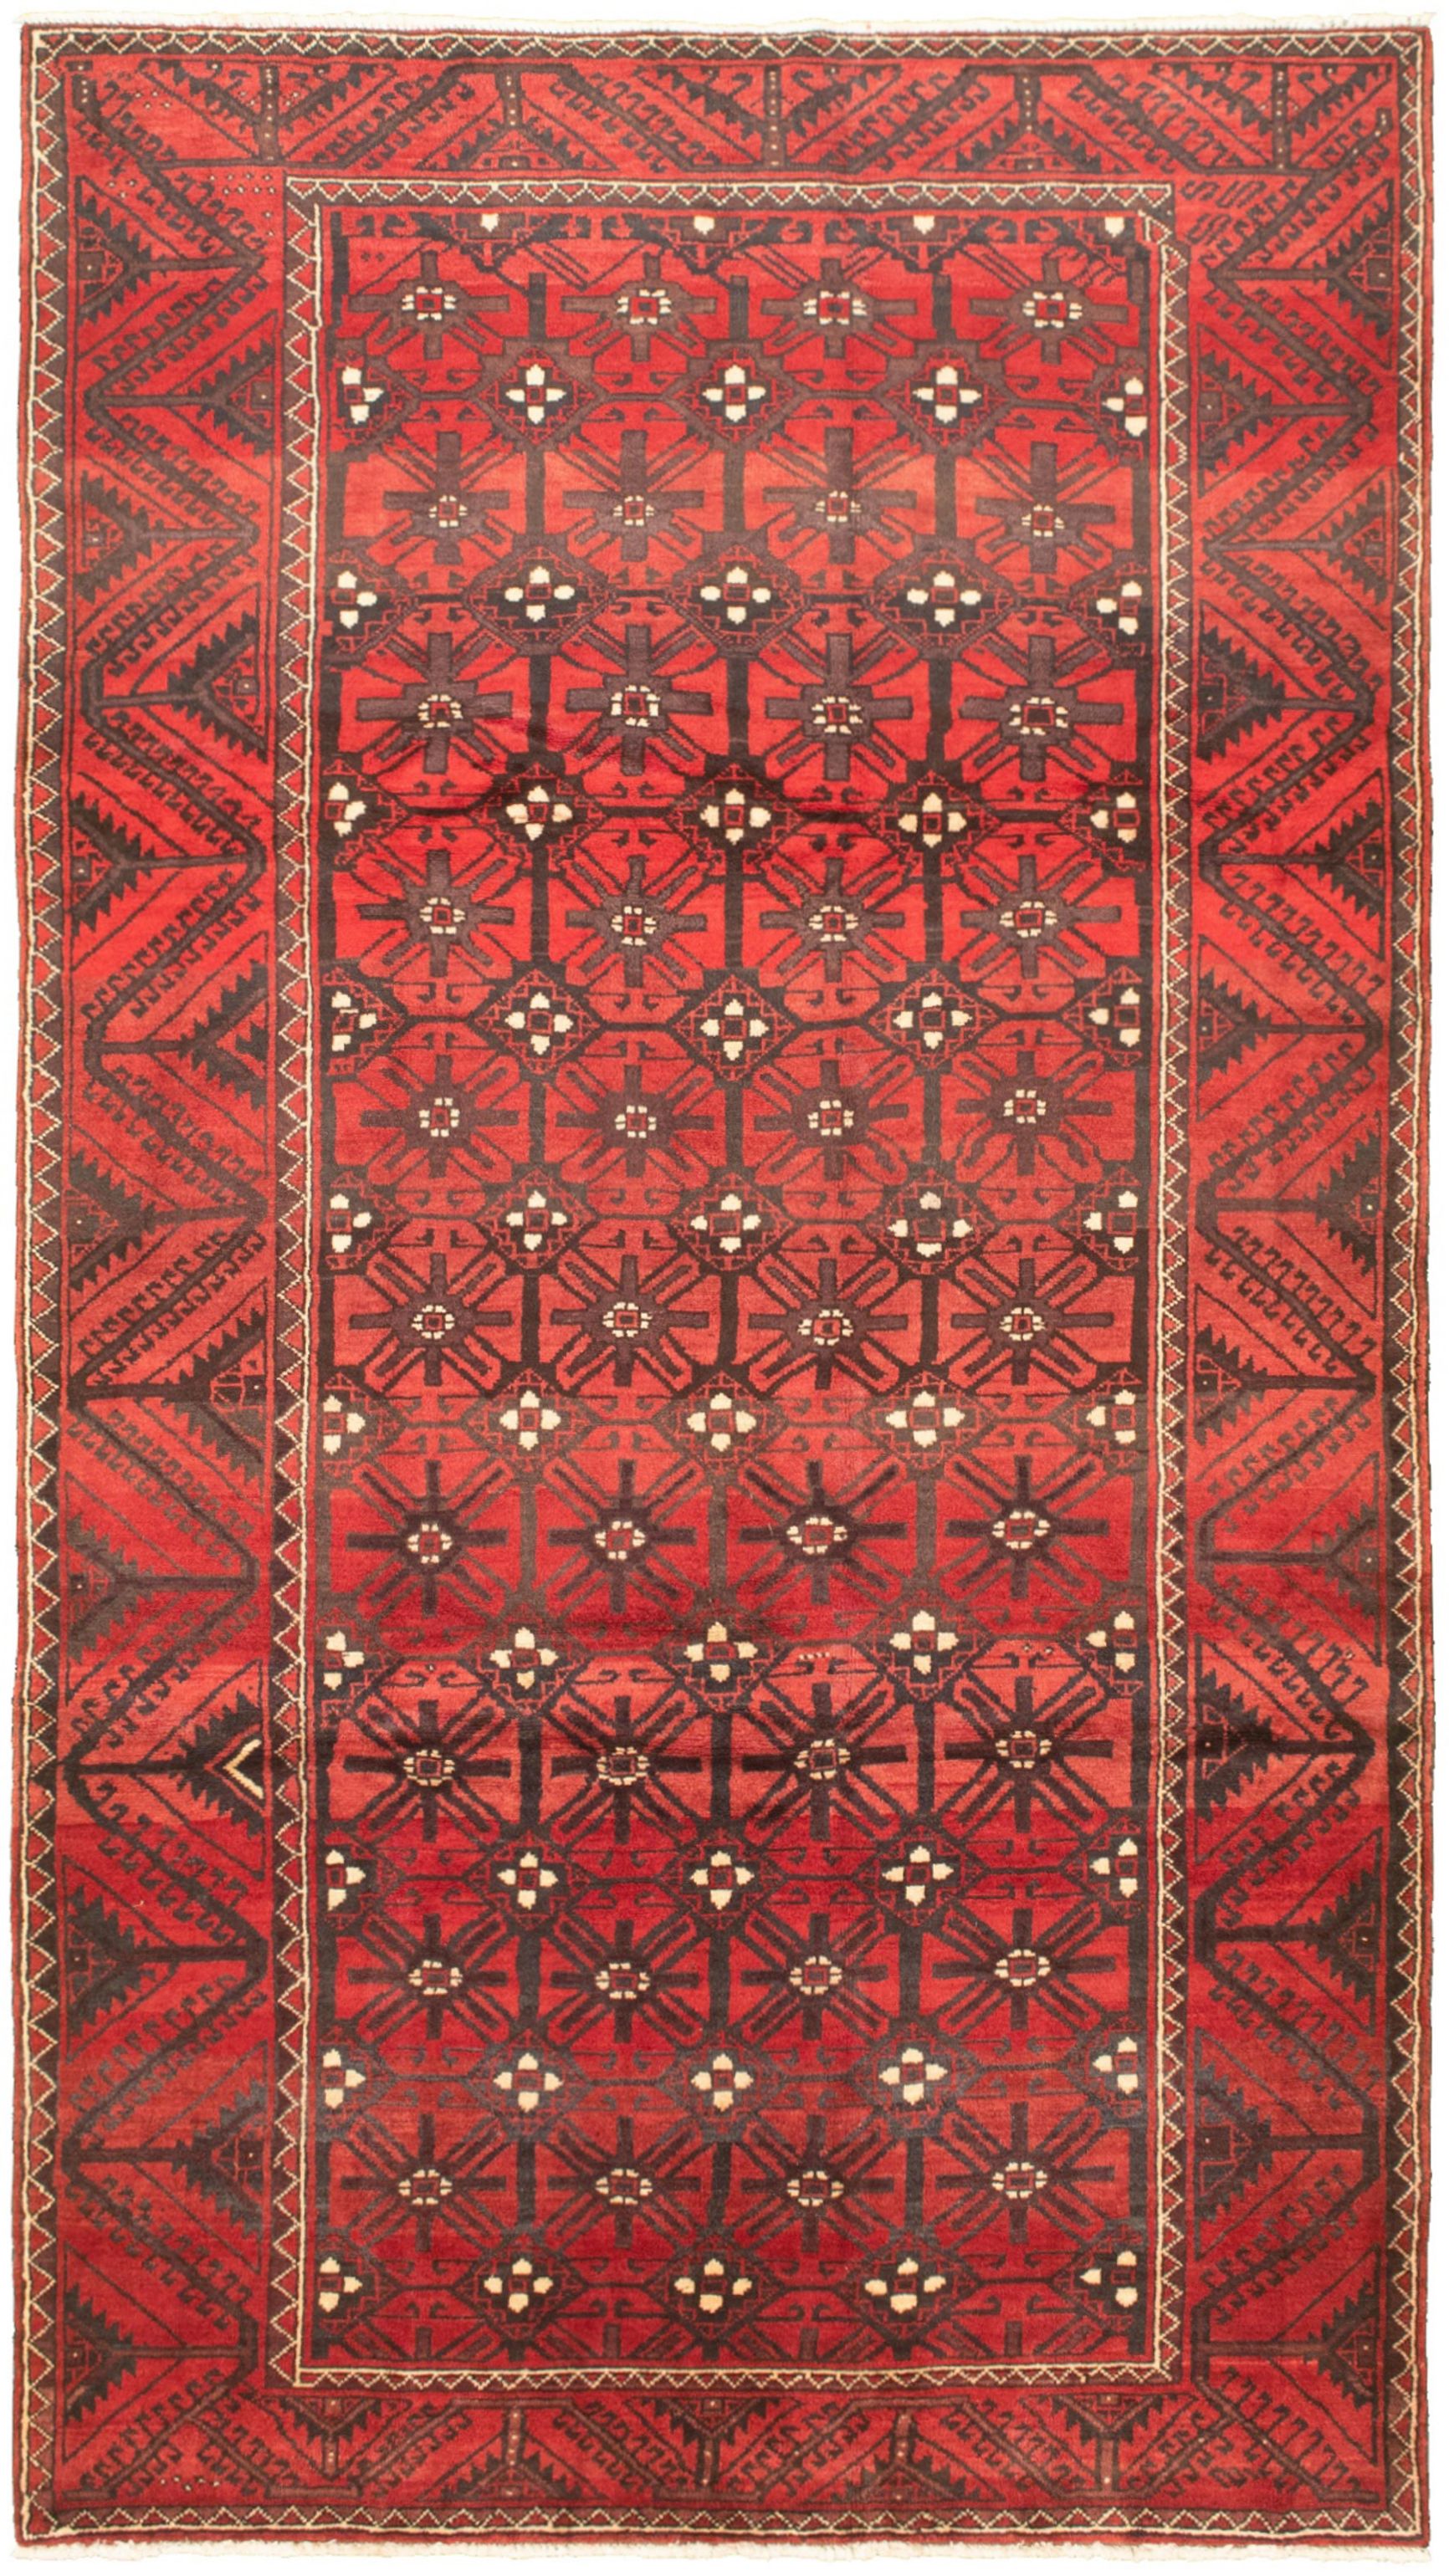 Hand-knotted Konya Anatolian Red Wool Rug 5'3" x 9'10"  Size: 5'3" x 9'10"  